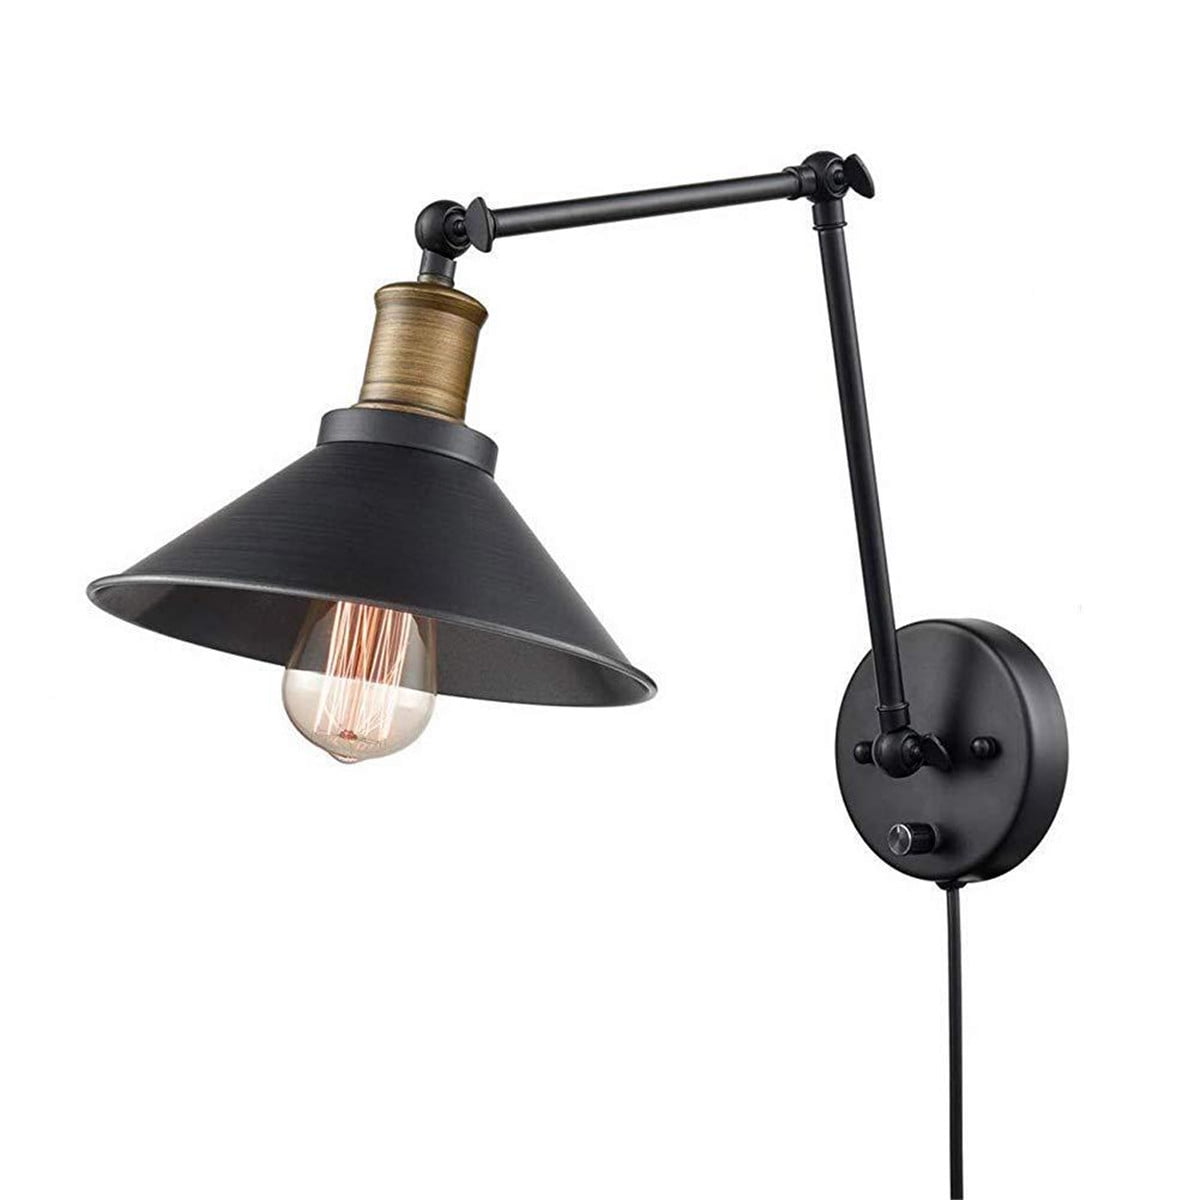 Retro Vintage Swing Arm Iron Wall Sconce Light Fixture 360° Adjustable Wall Lamp 